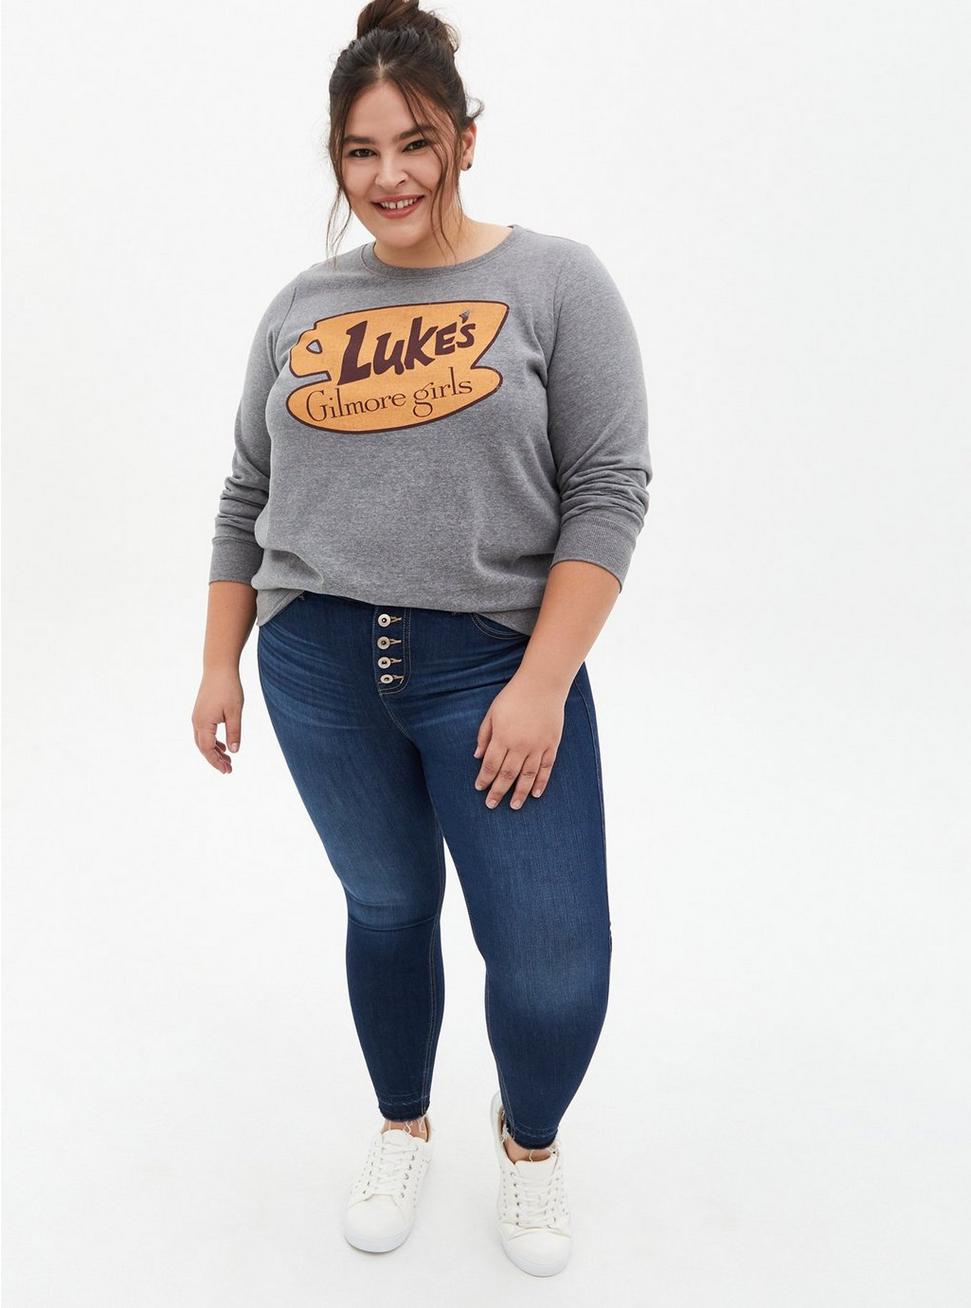 Plus Size - Gilmore Girls Luke’s Diner Heather Grey Sweatshirt - Torrid